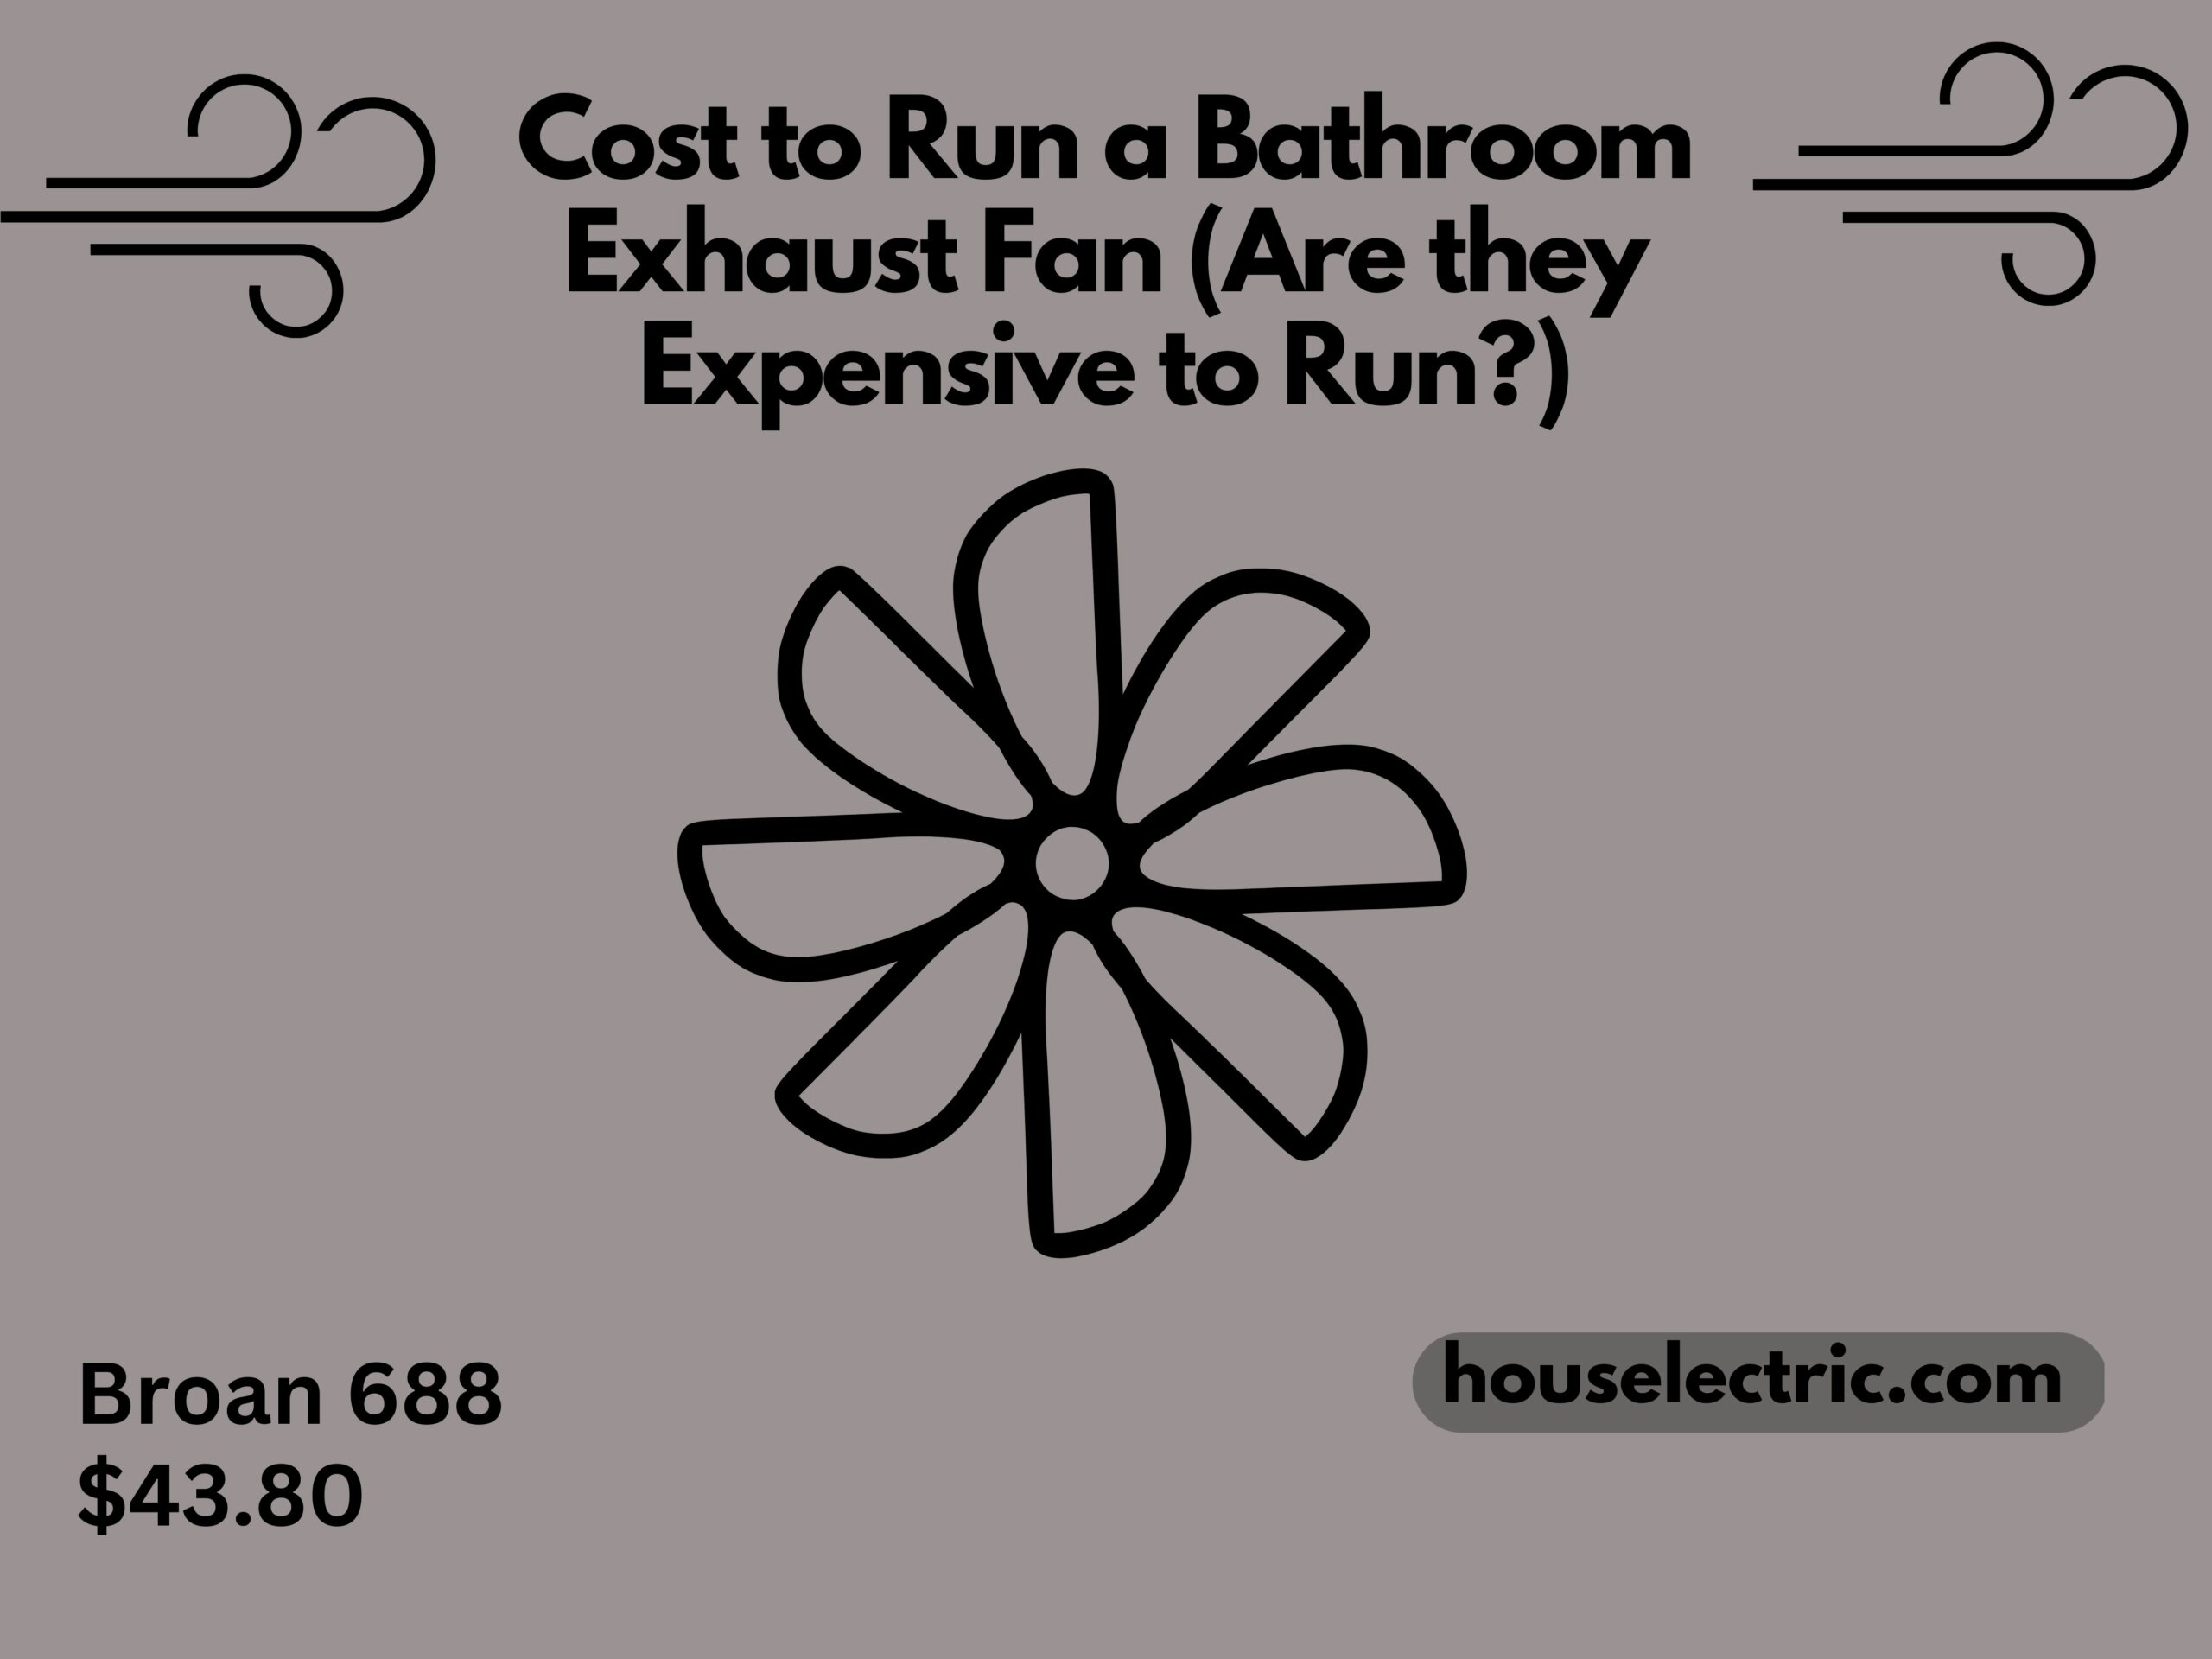 Cost to run a bathroom exhaust fan